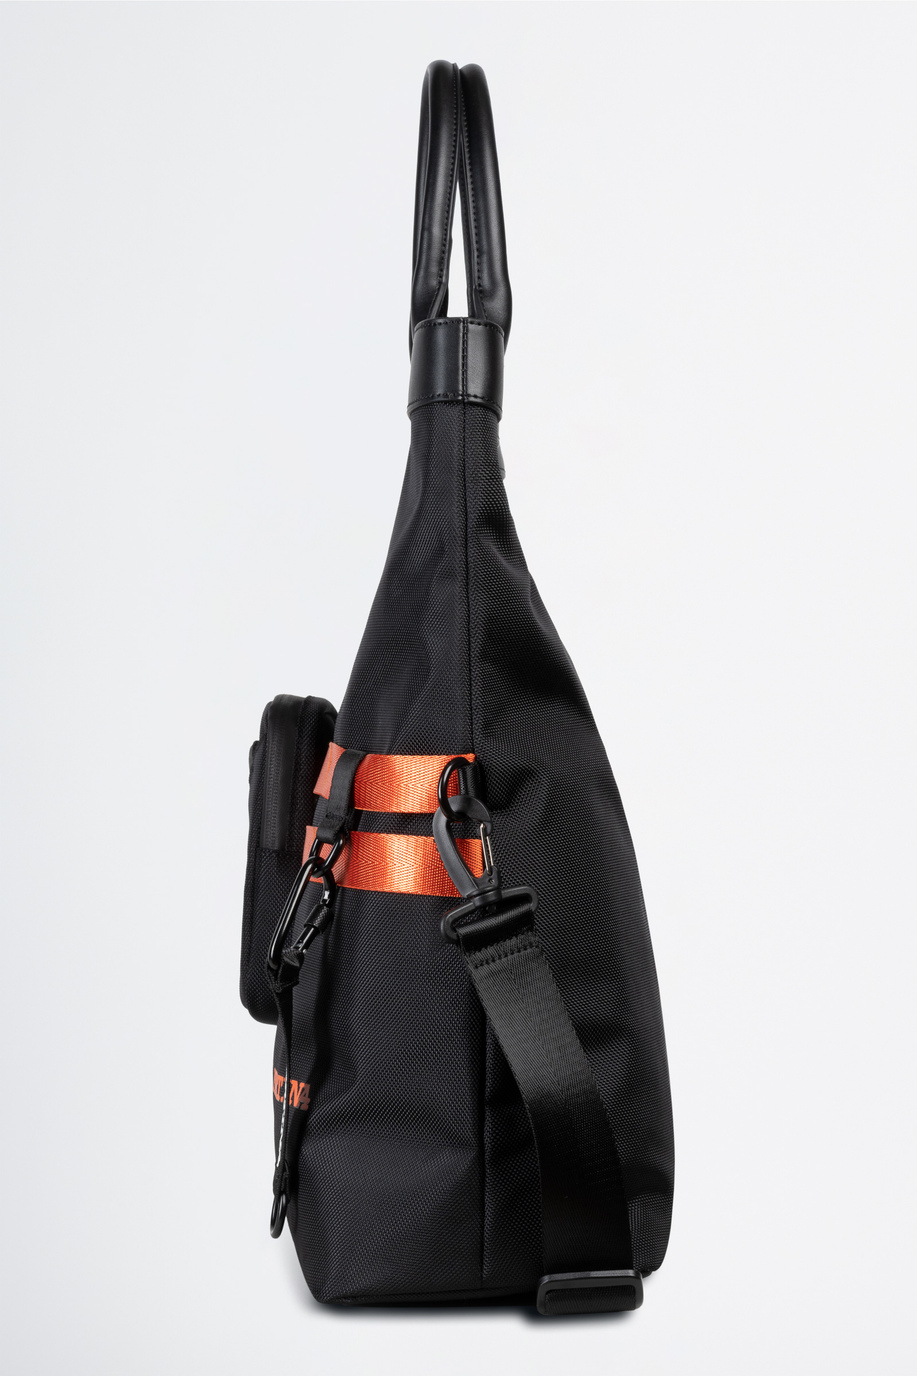 Men bag in synthetic fabric - Bags | La Martina - Official Online Shop